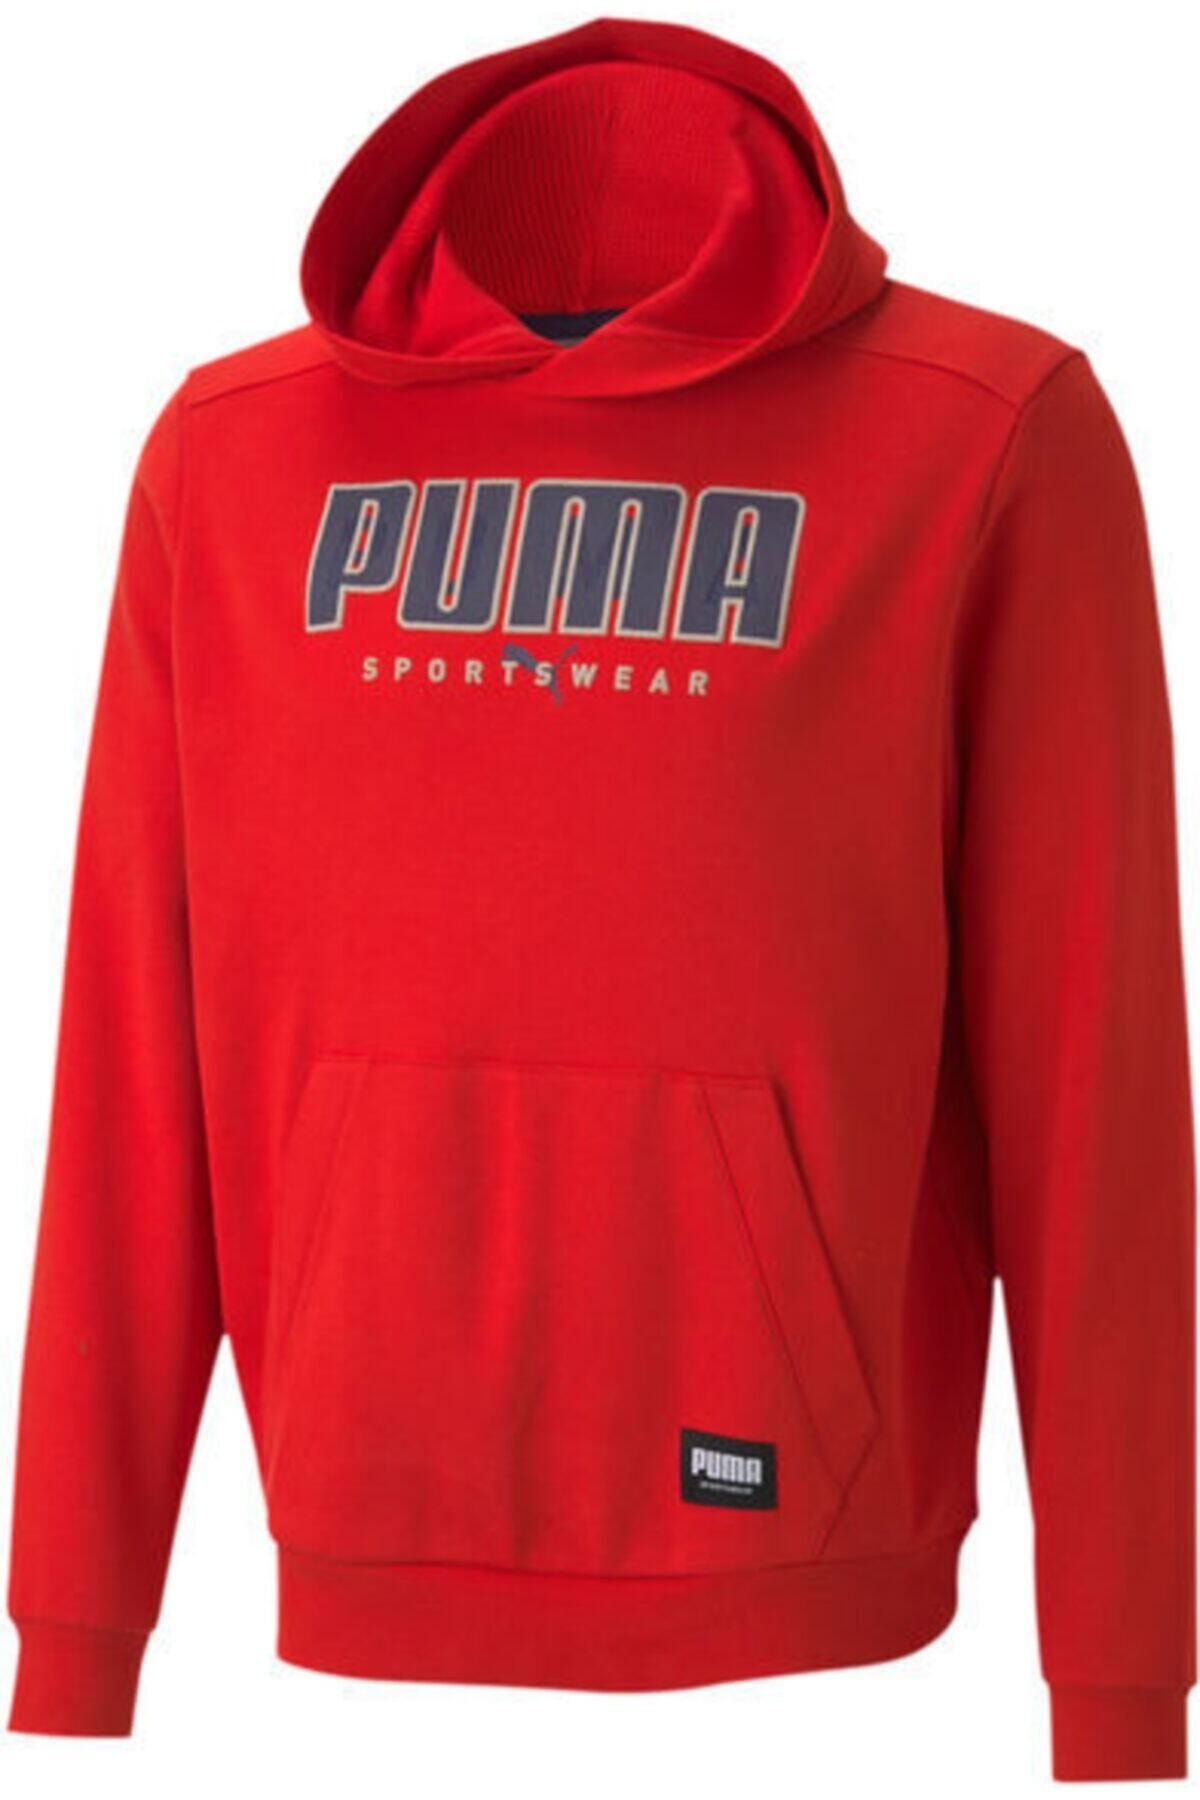 Puma Athletics Hoodie Sweatshirt Men